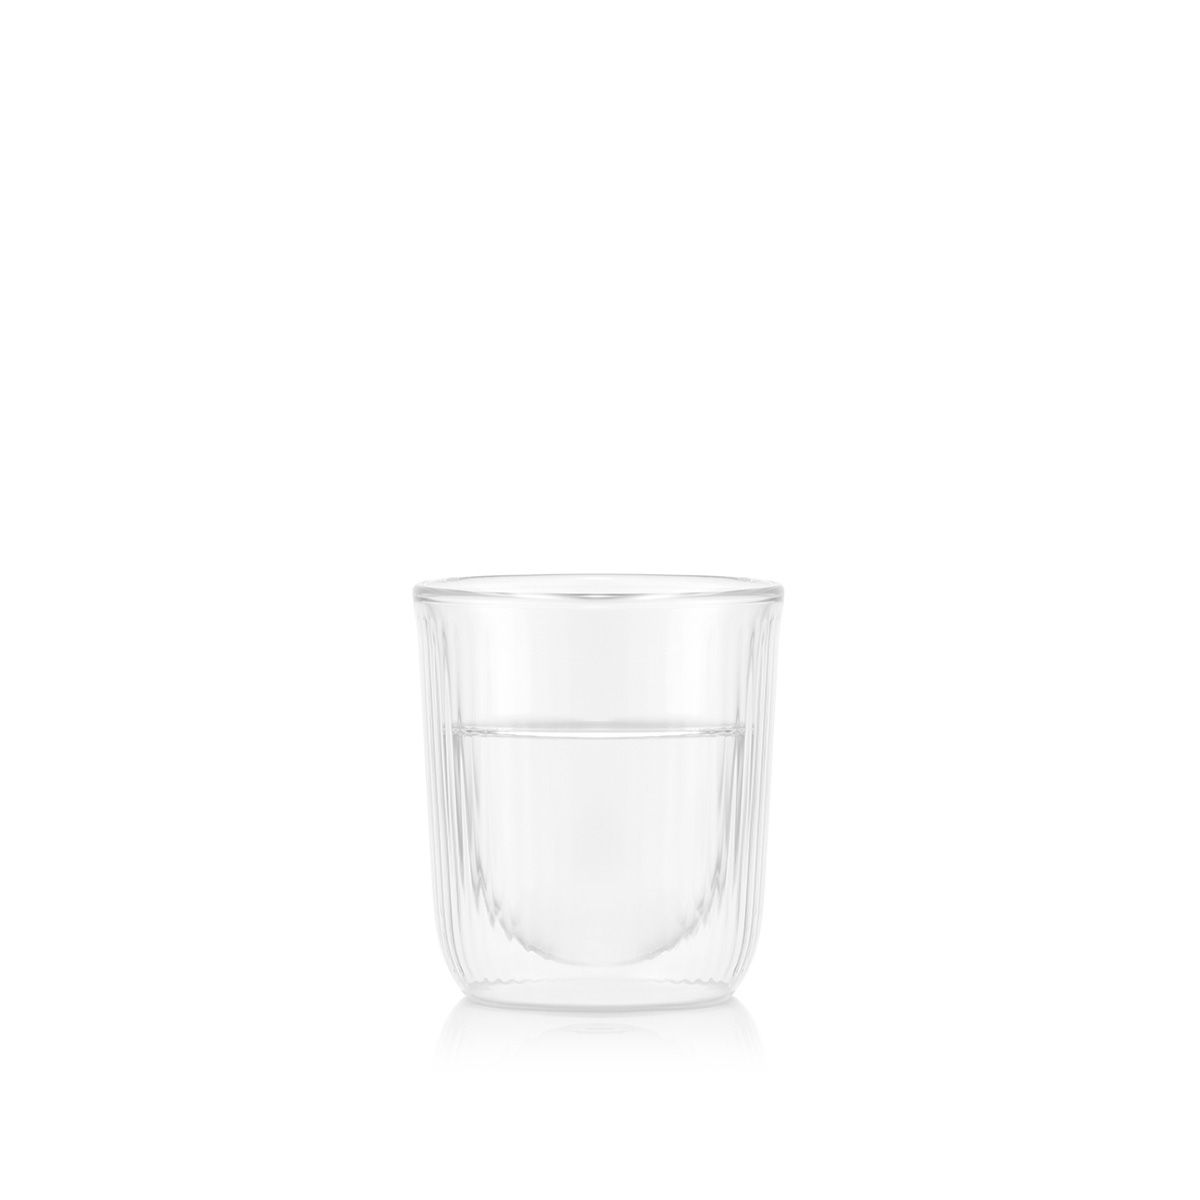 Bodum Douro set met 2 sake -bril dubbel ommuurd, transparant